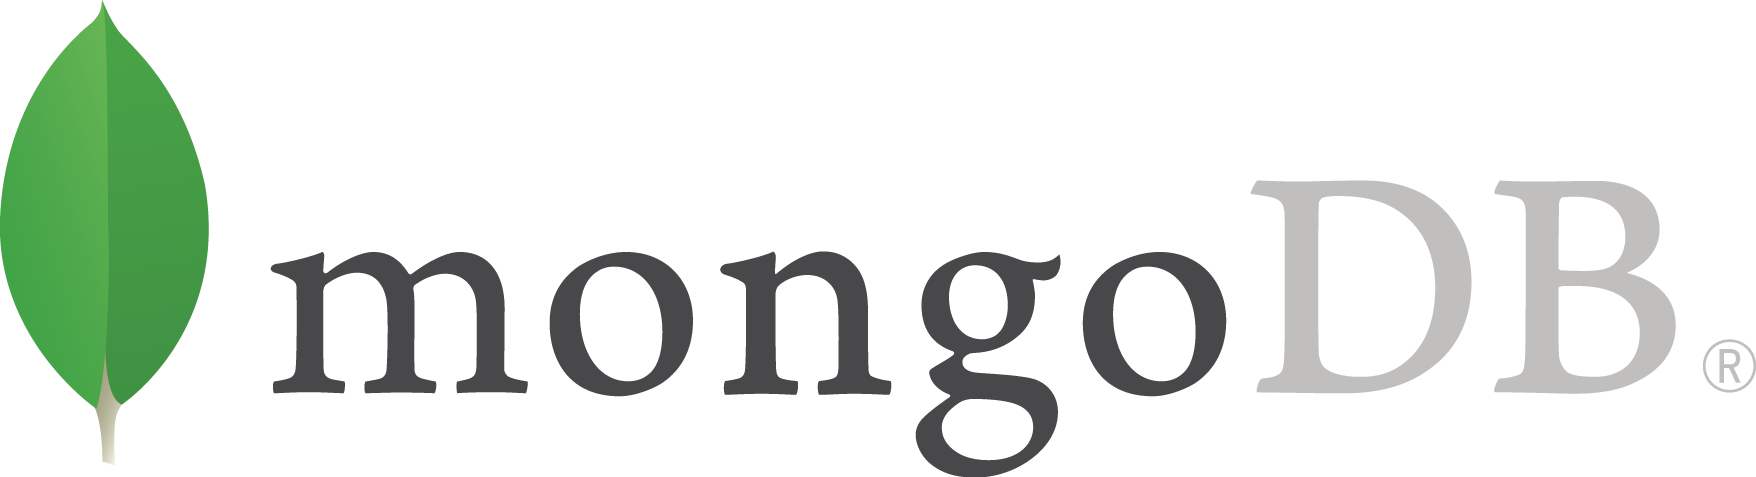 MongoDB - Mailparser Integrations